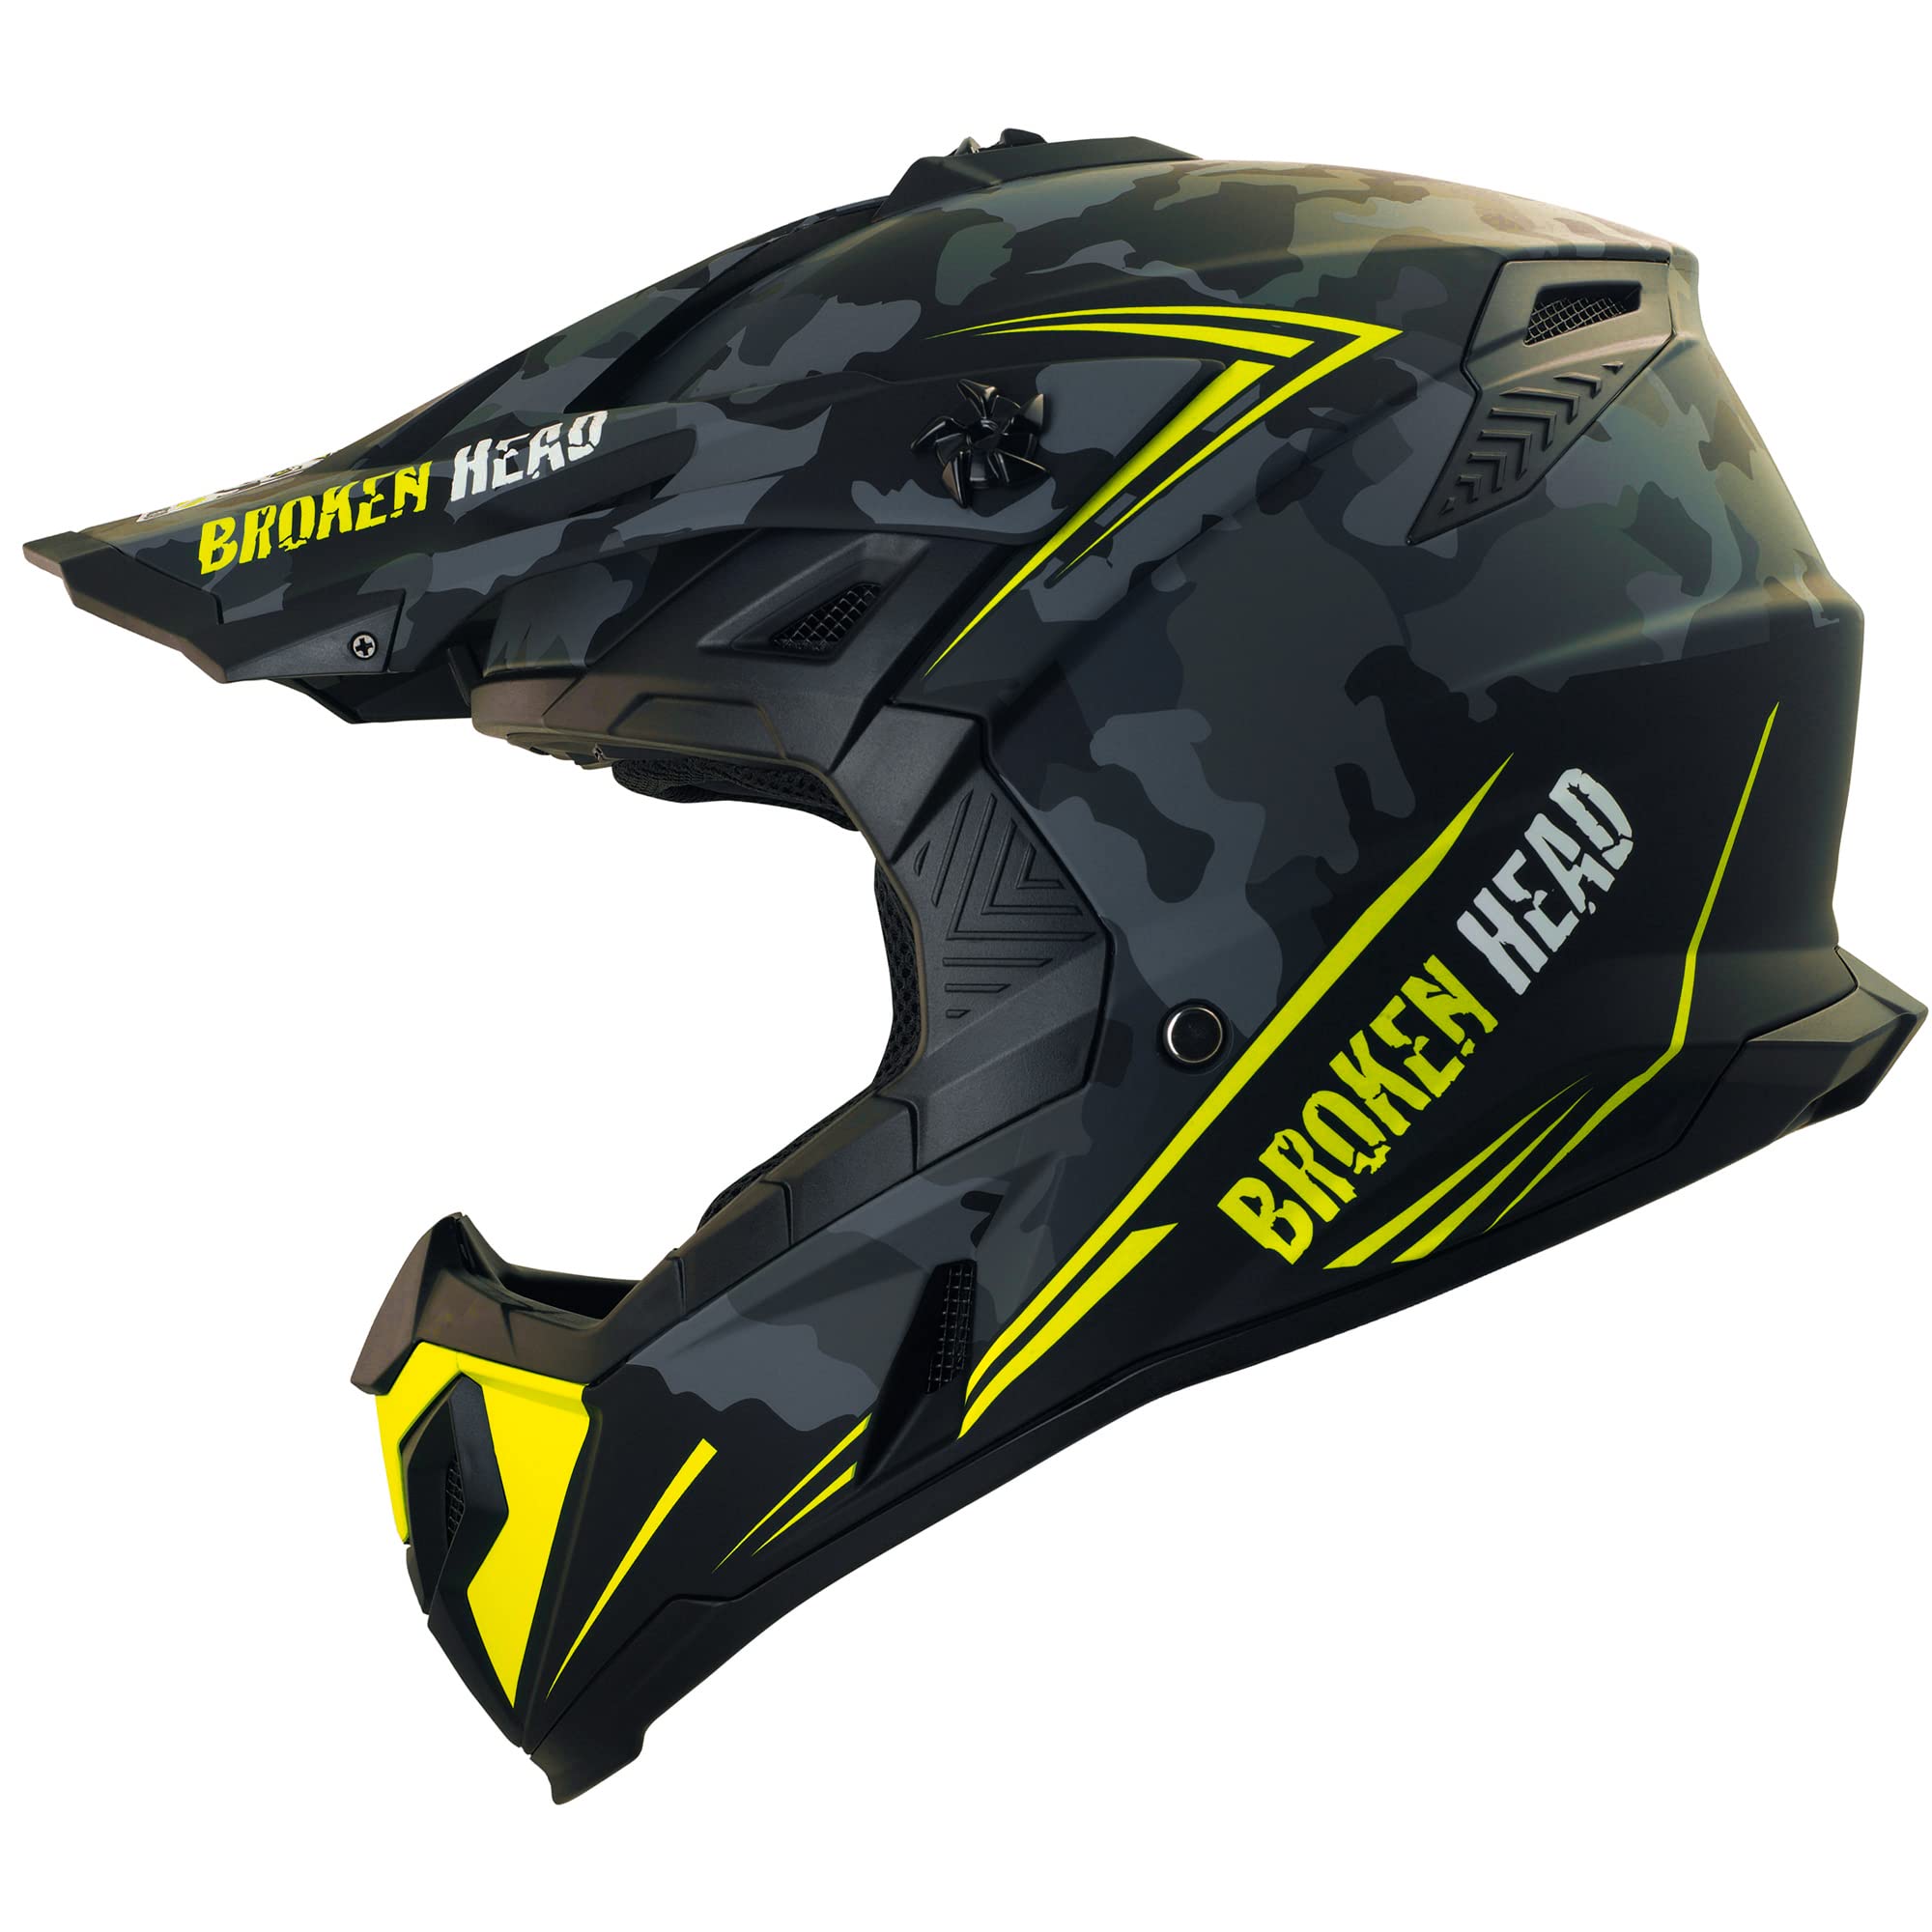 Broken Head Squadron Rebelution Camouflage Grau Gelb Motorradhelm - MX Motocross-Helm - Quad-Helm - Sumo-Helm (XL (61-62 cm))